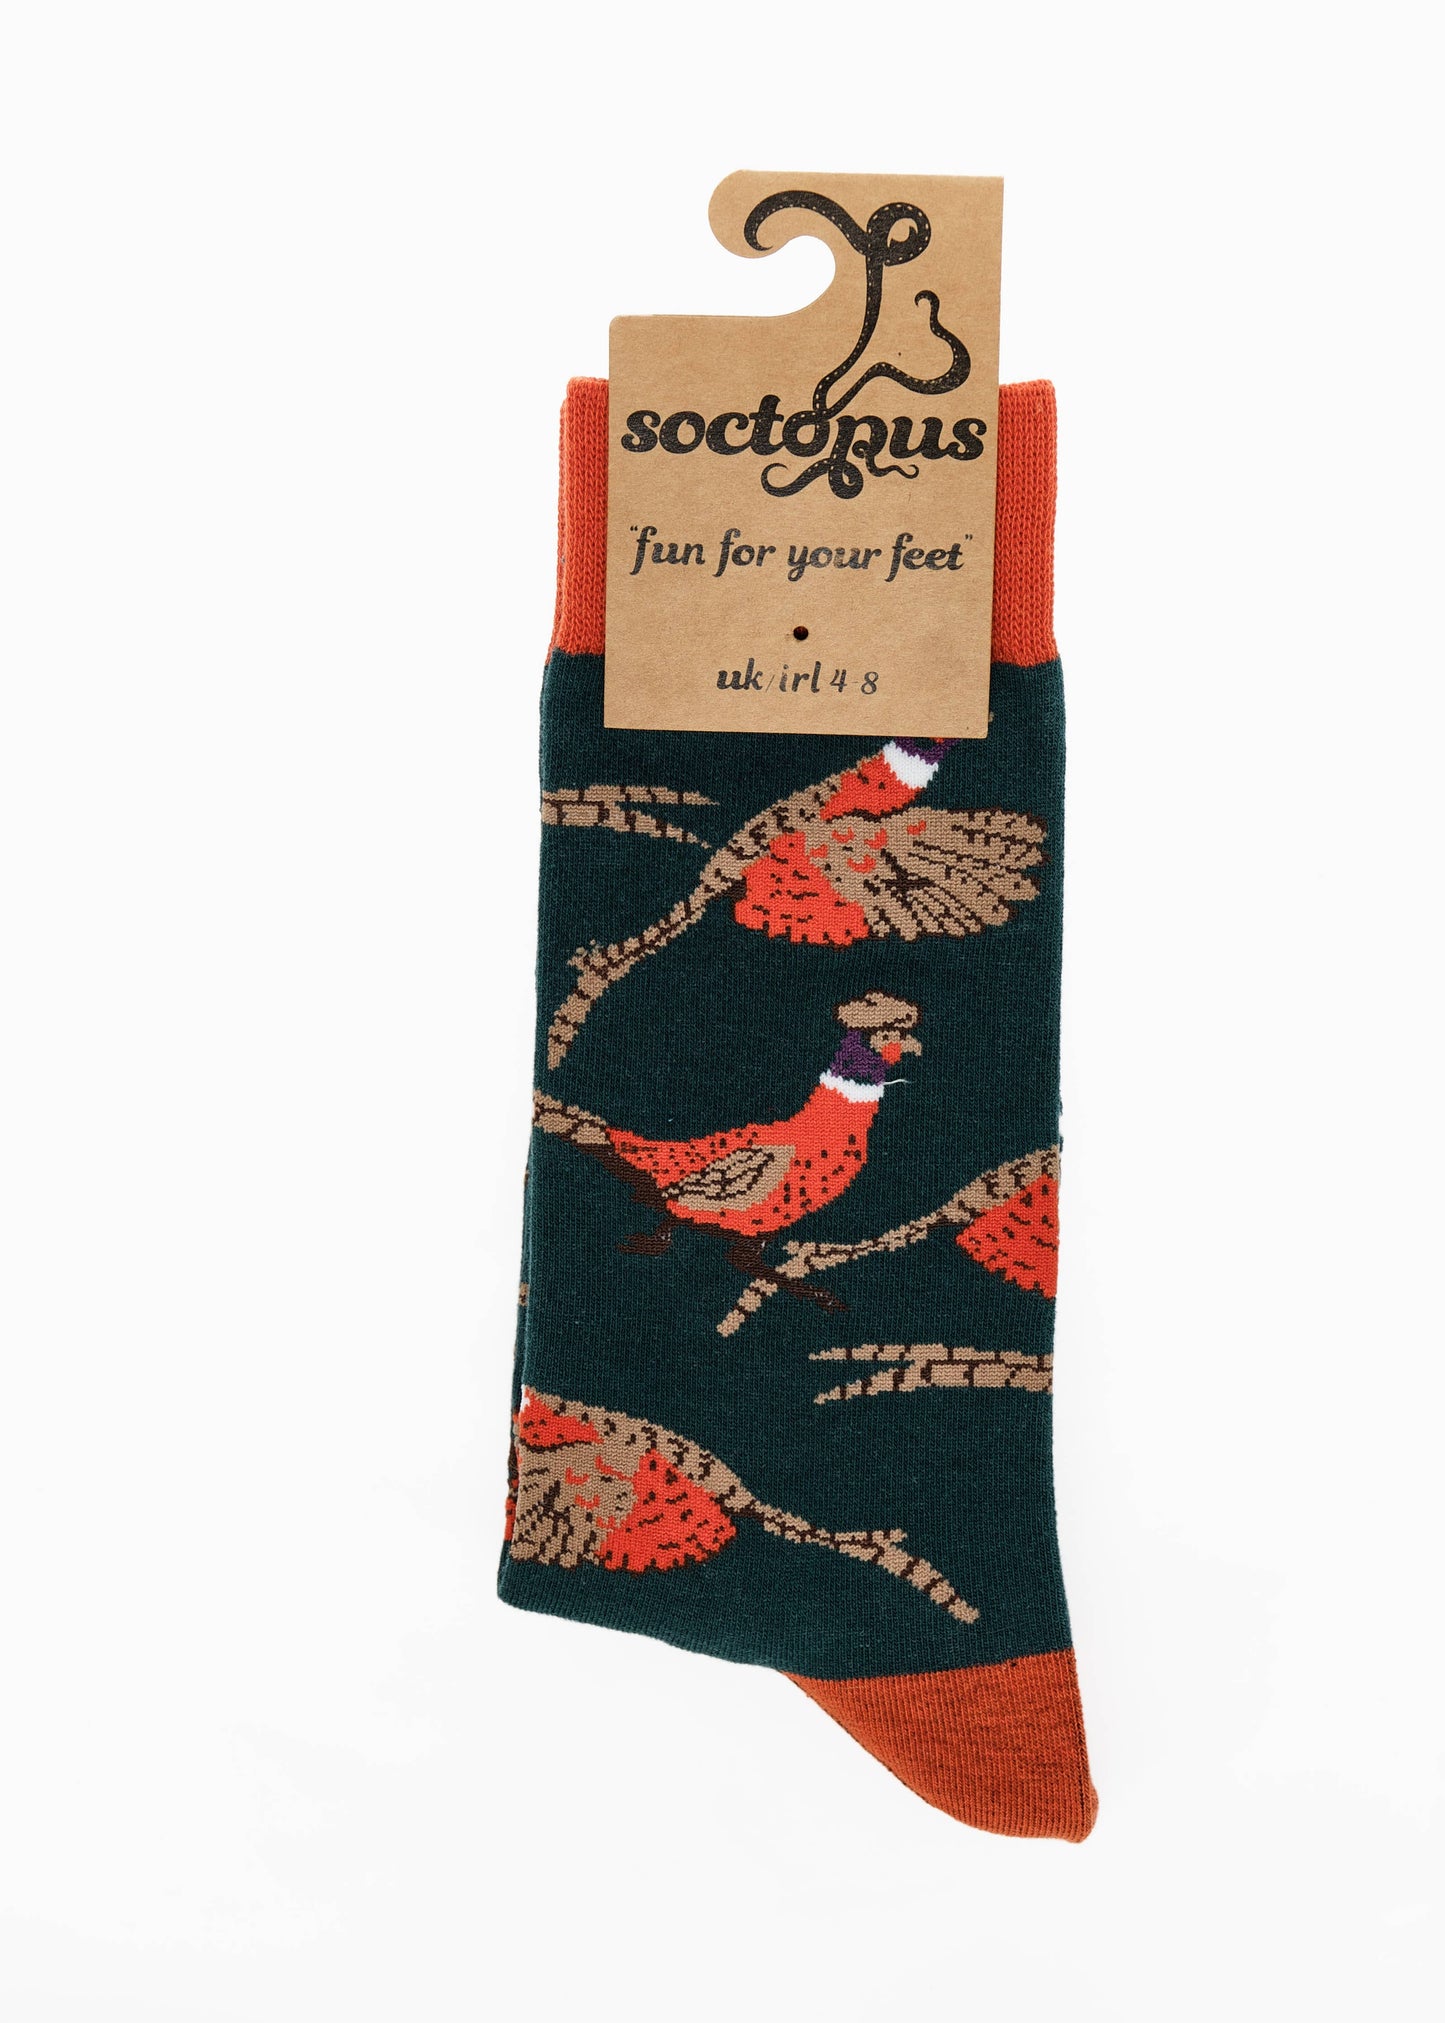 Pheasant Game Bird Socks